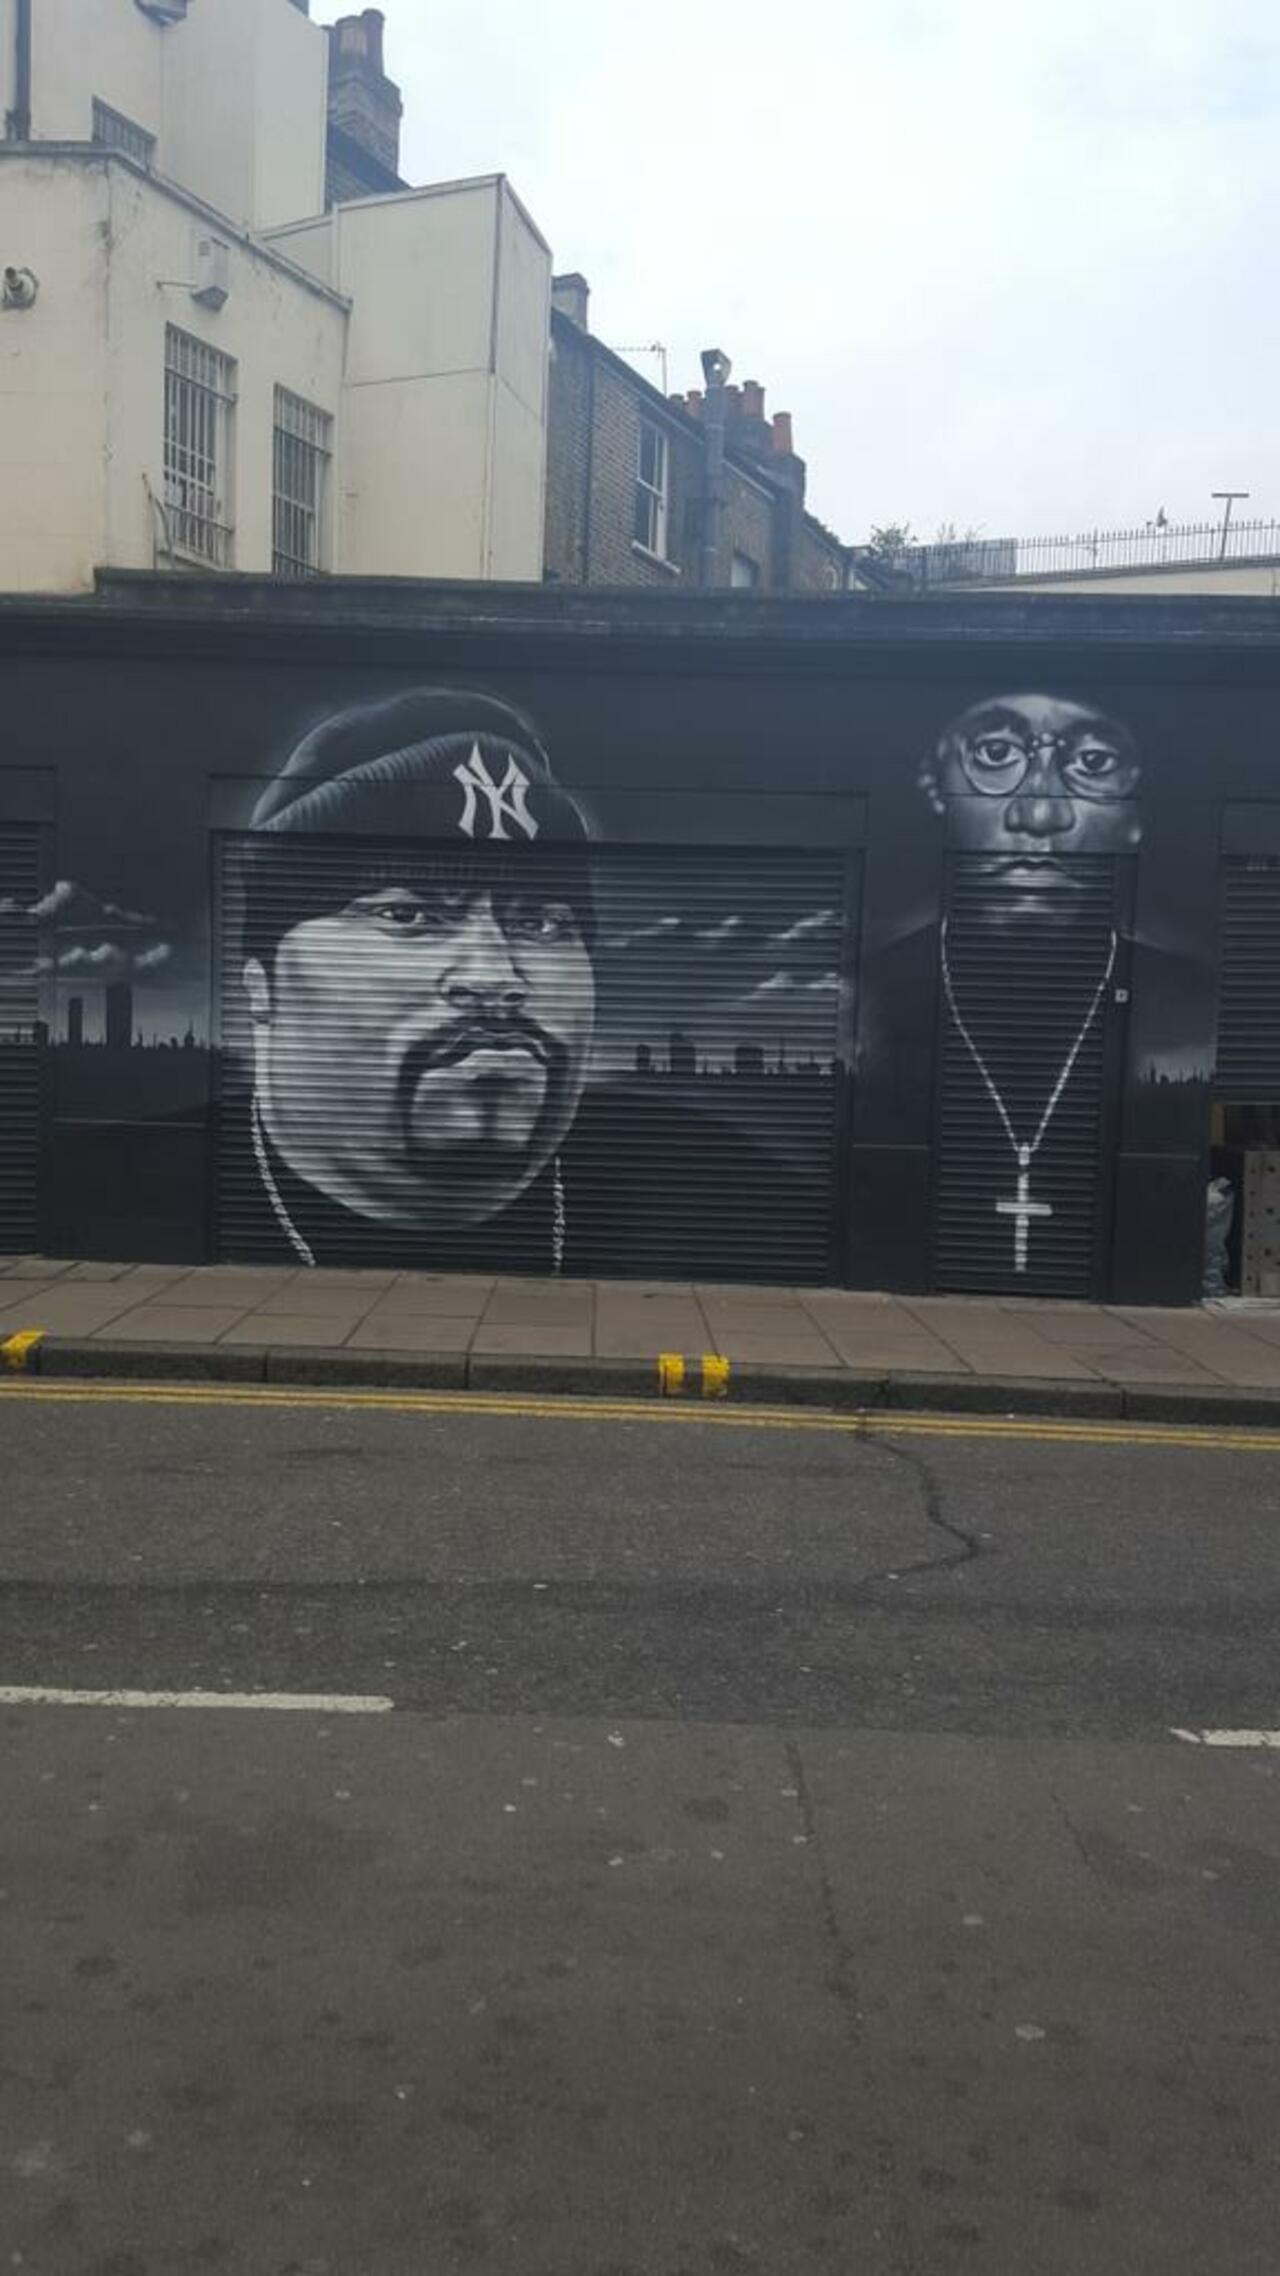 #StreetArt #graffiti #Brixton #HipHop https://t.co/JETUva9hIz